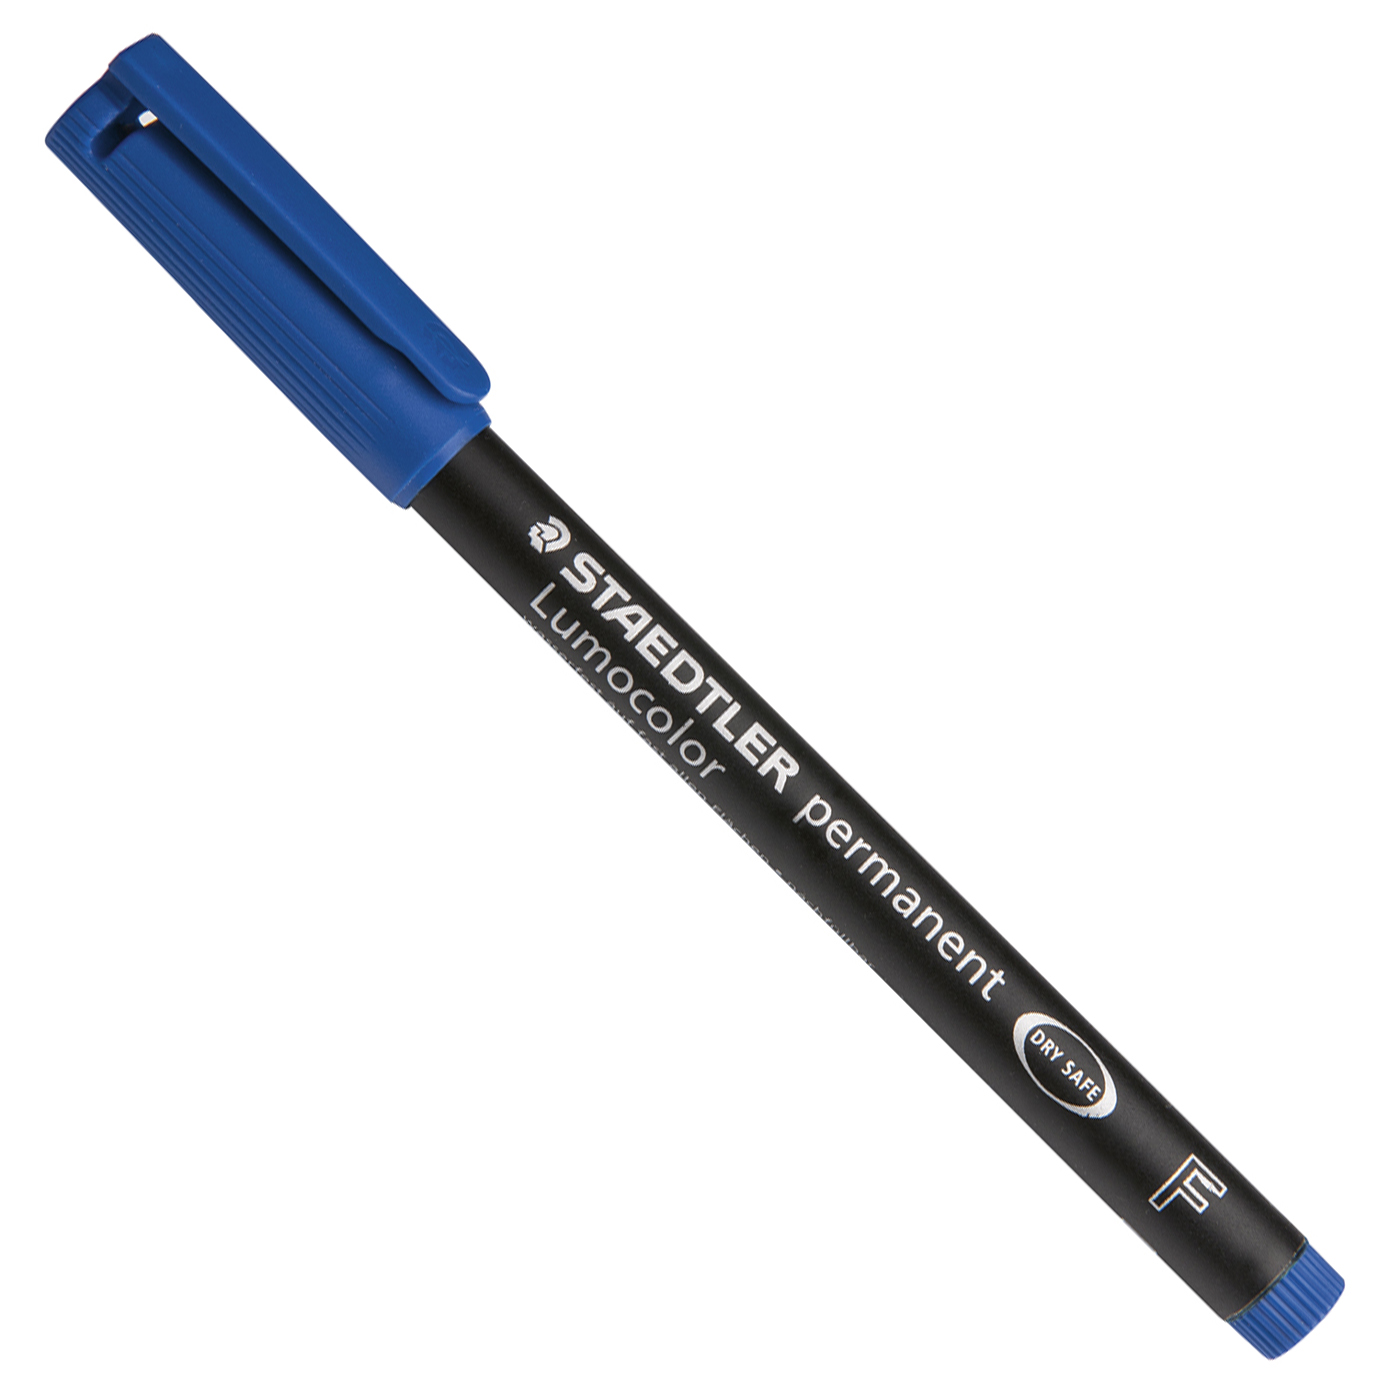 Staedtler Mars Lumocolor permanent pen 313 Markierer, fein, blau - 1 Stück